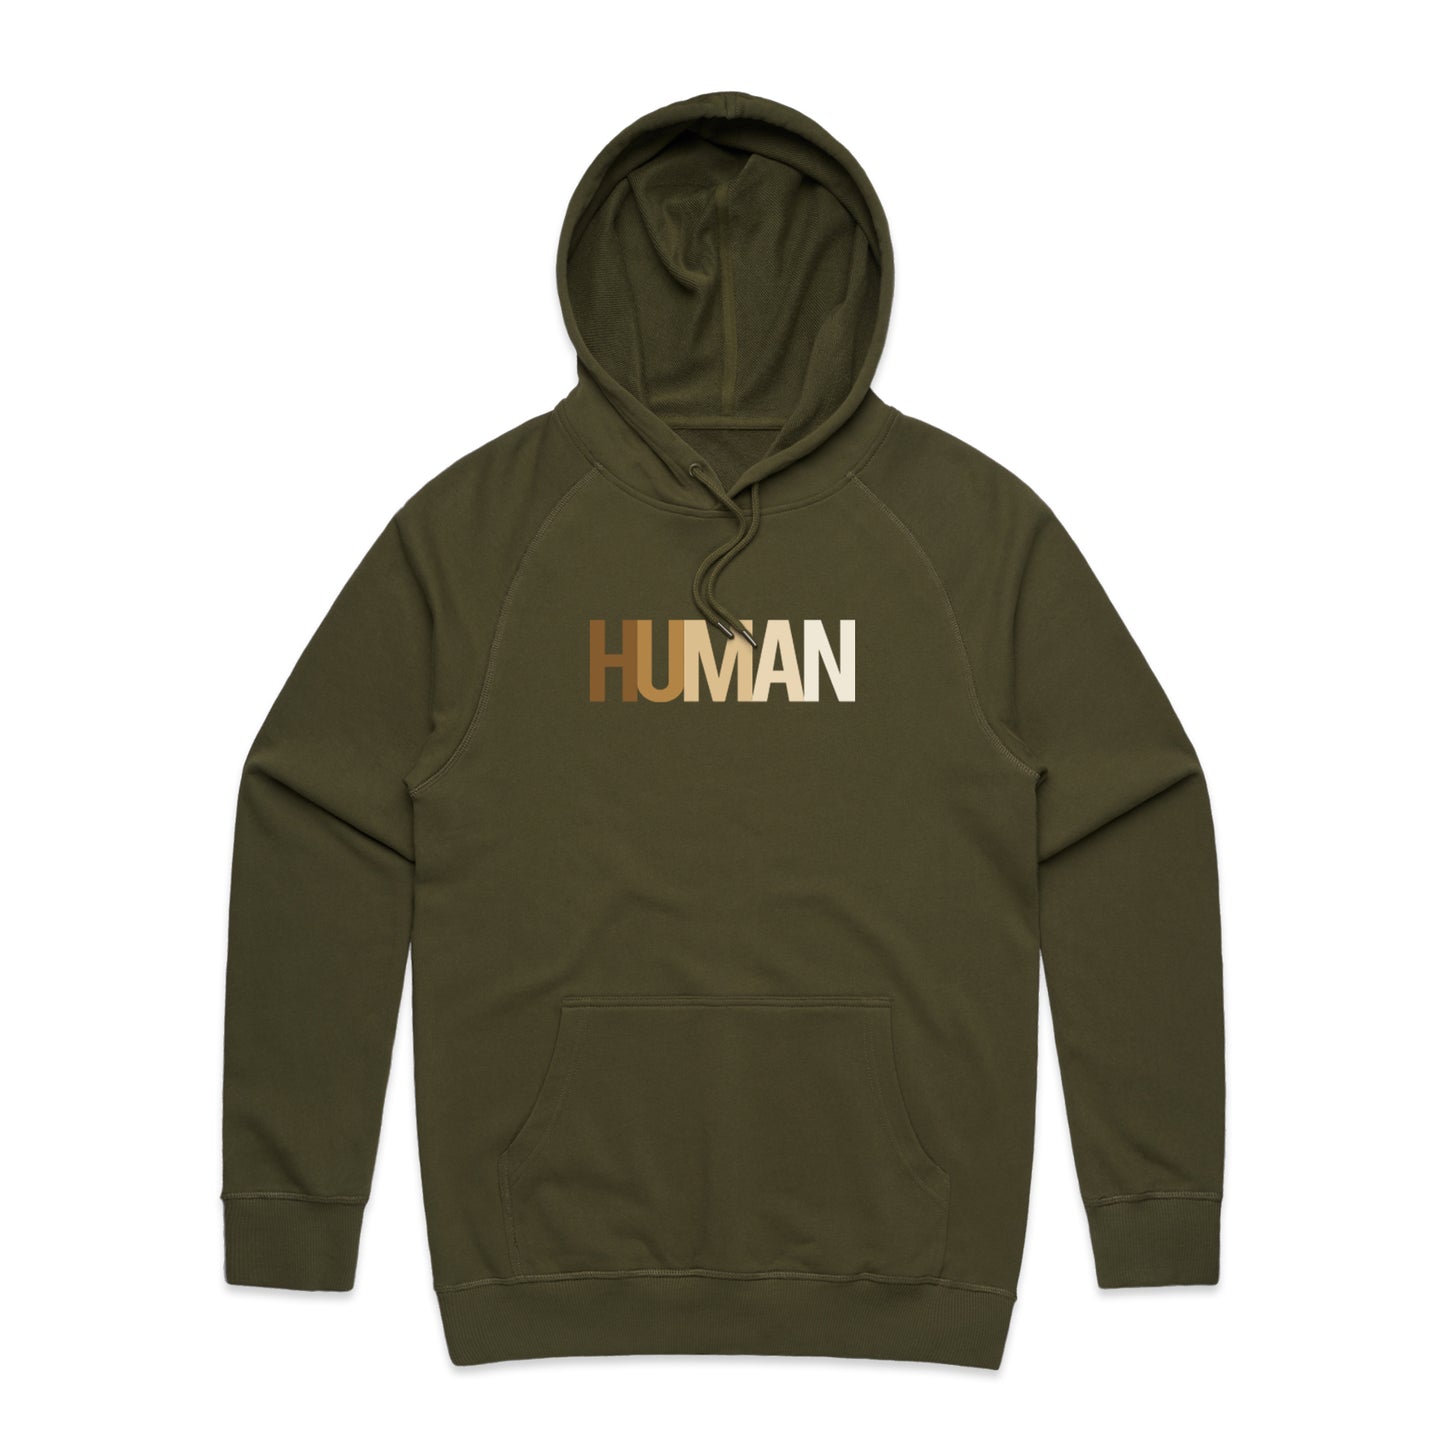 Human Premium Hoody